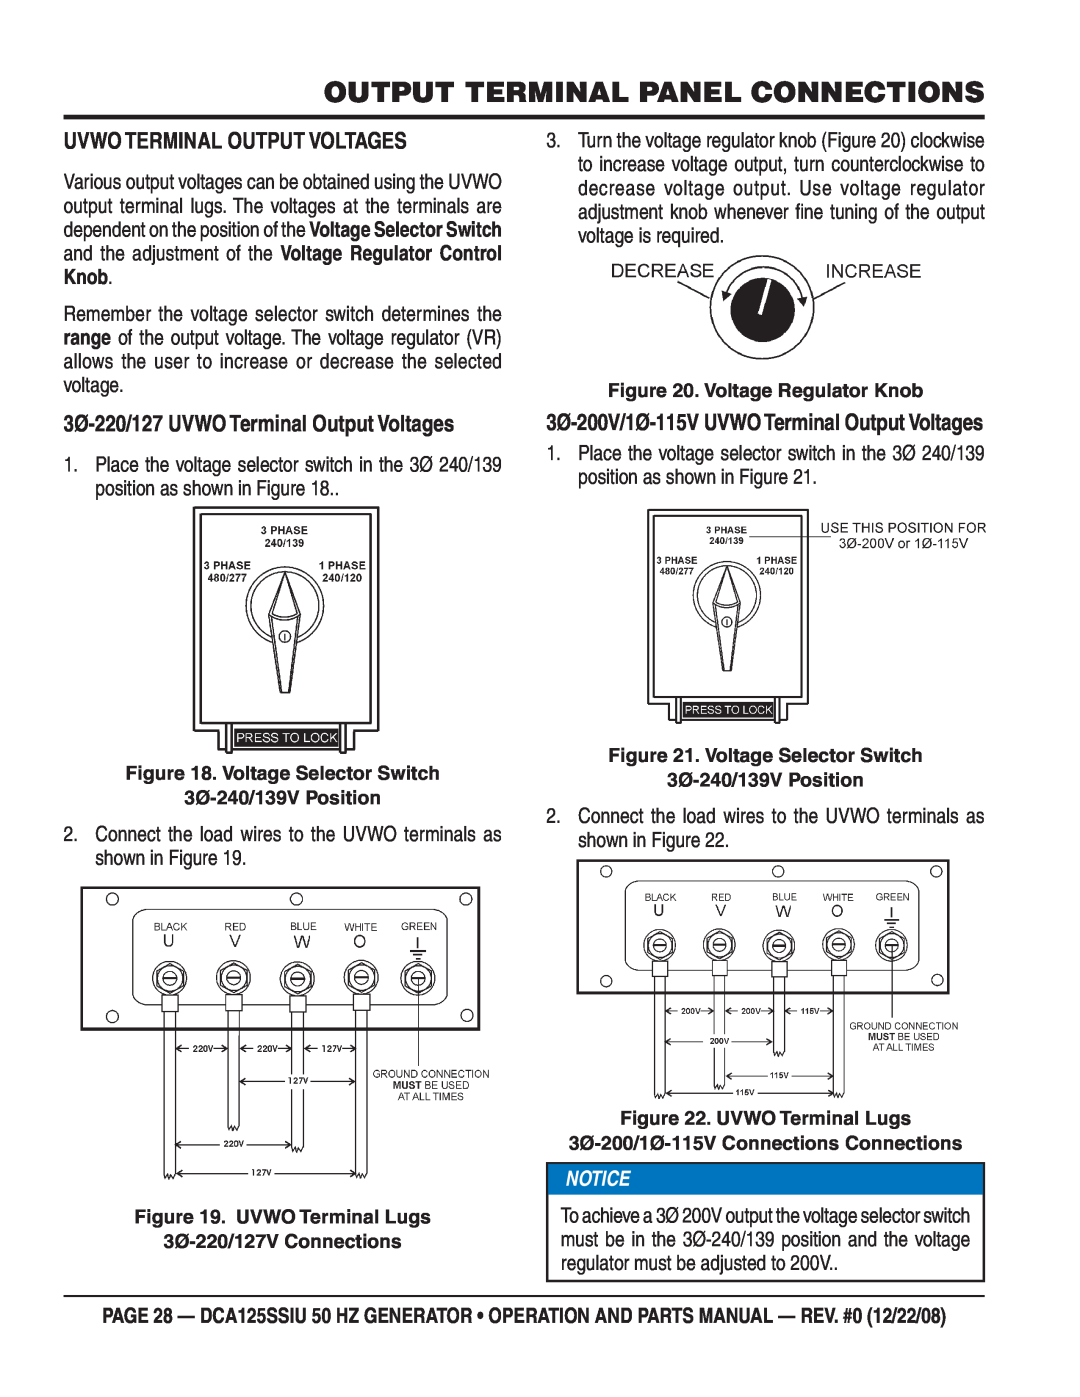 Multiquip DCA125SSIU manual Output Terminal Panel Connections, Uvwo Terminal Output Voltages, Notice 